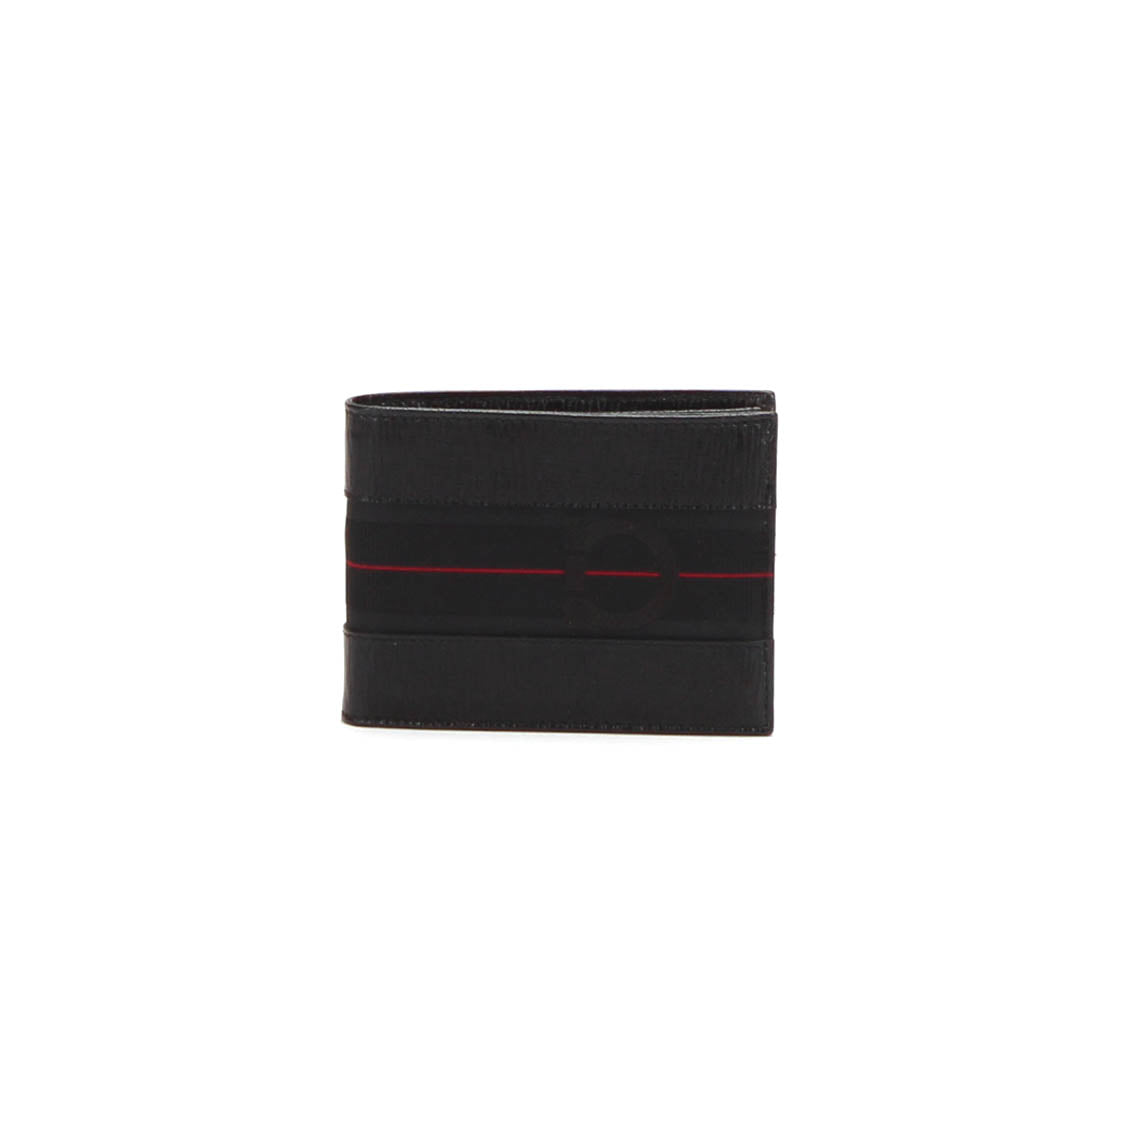 Salvatore Ferragamo Leather Bi-Fold Wallet Leather Short Wallet in Excellent condition